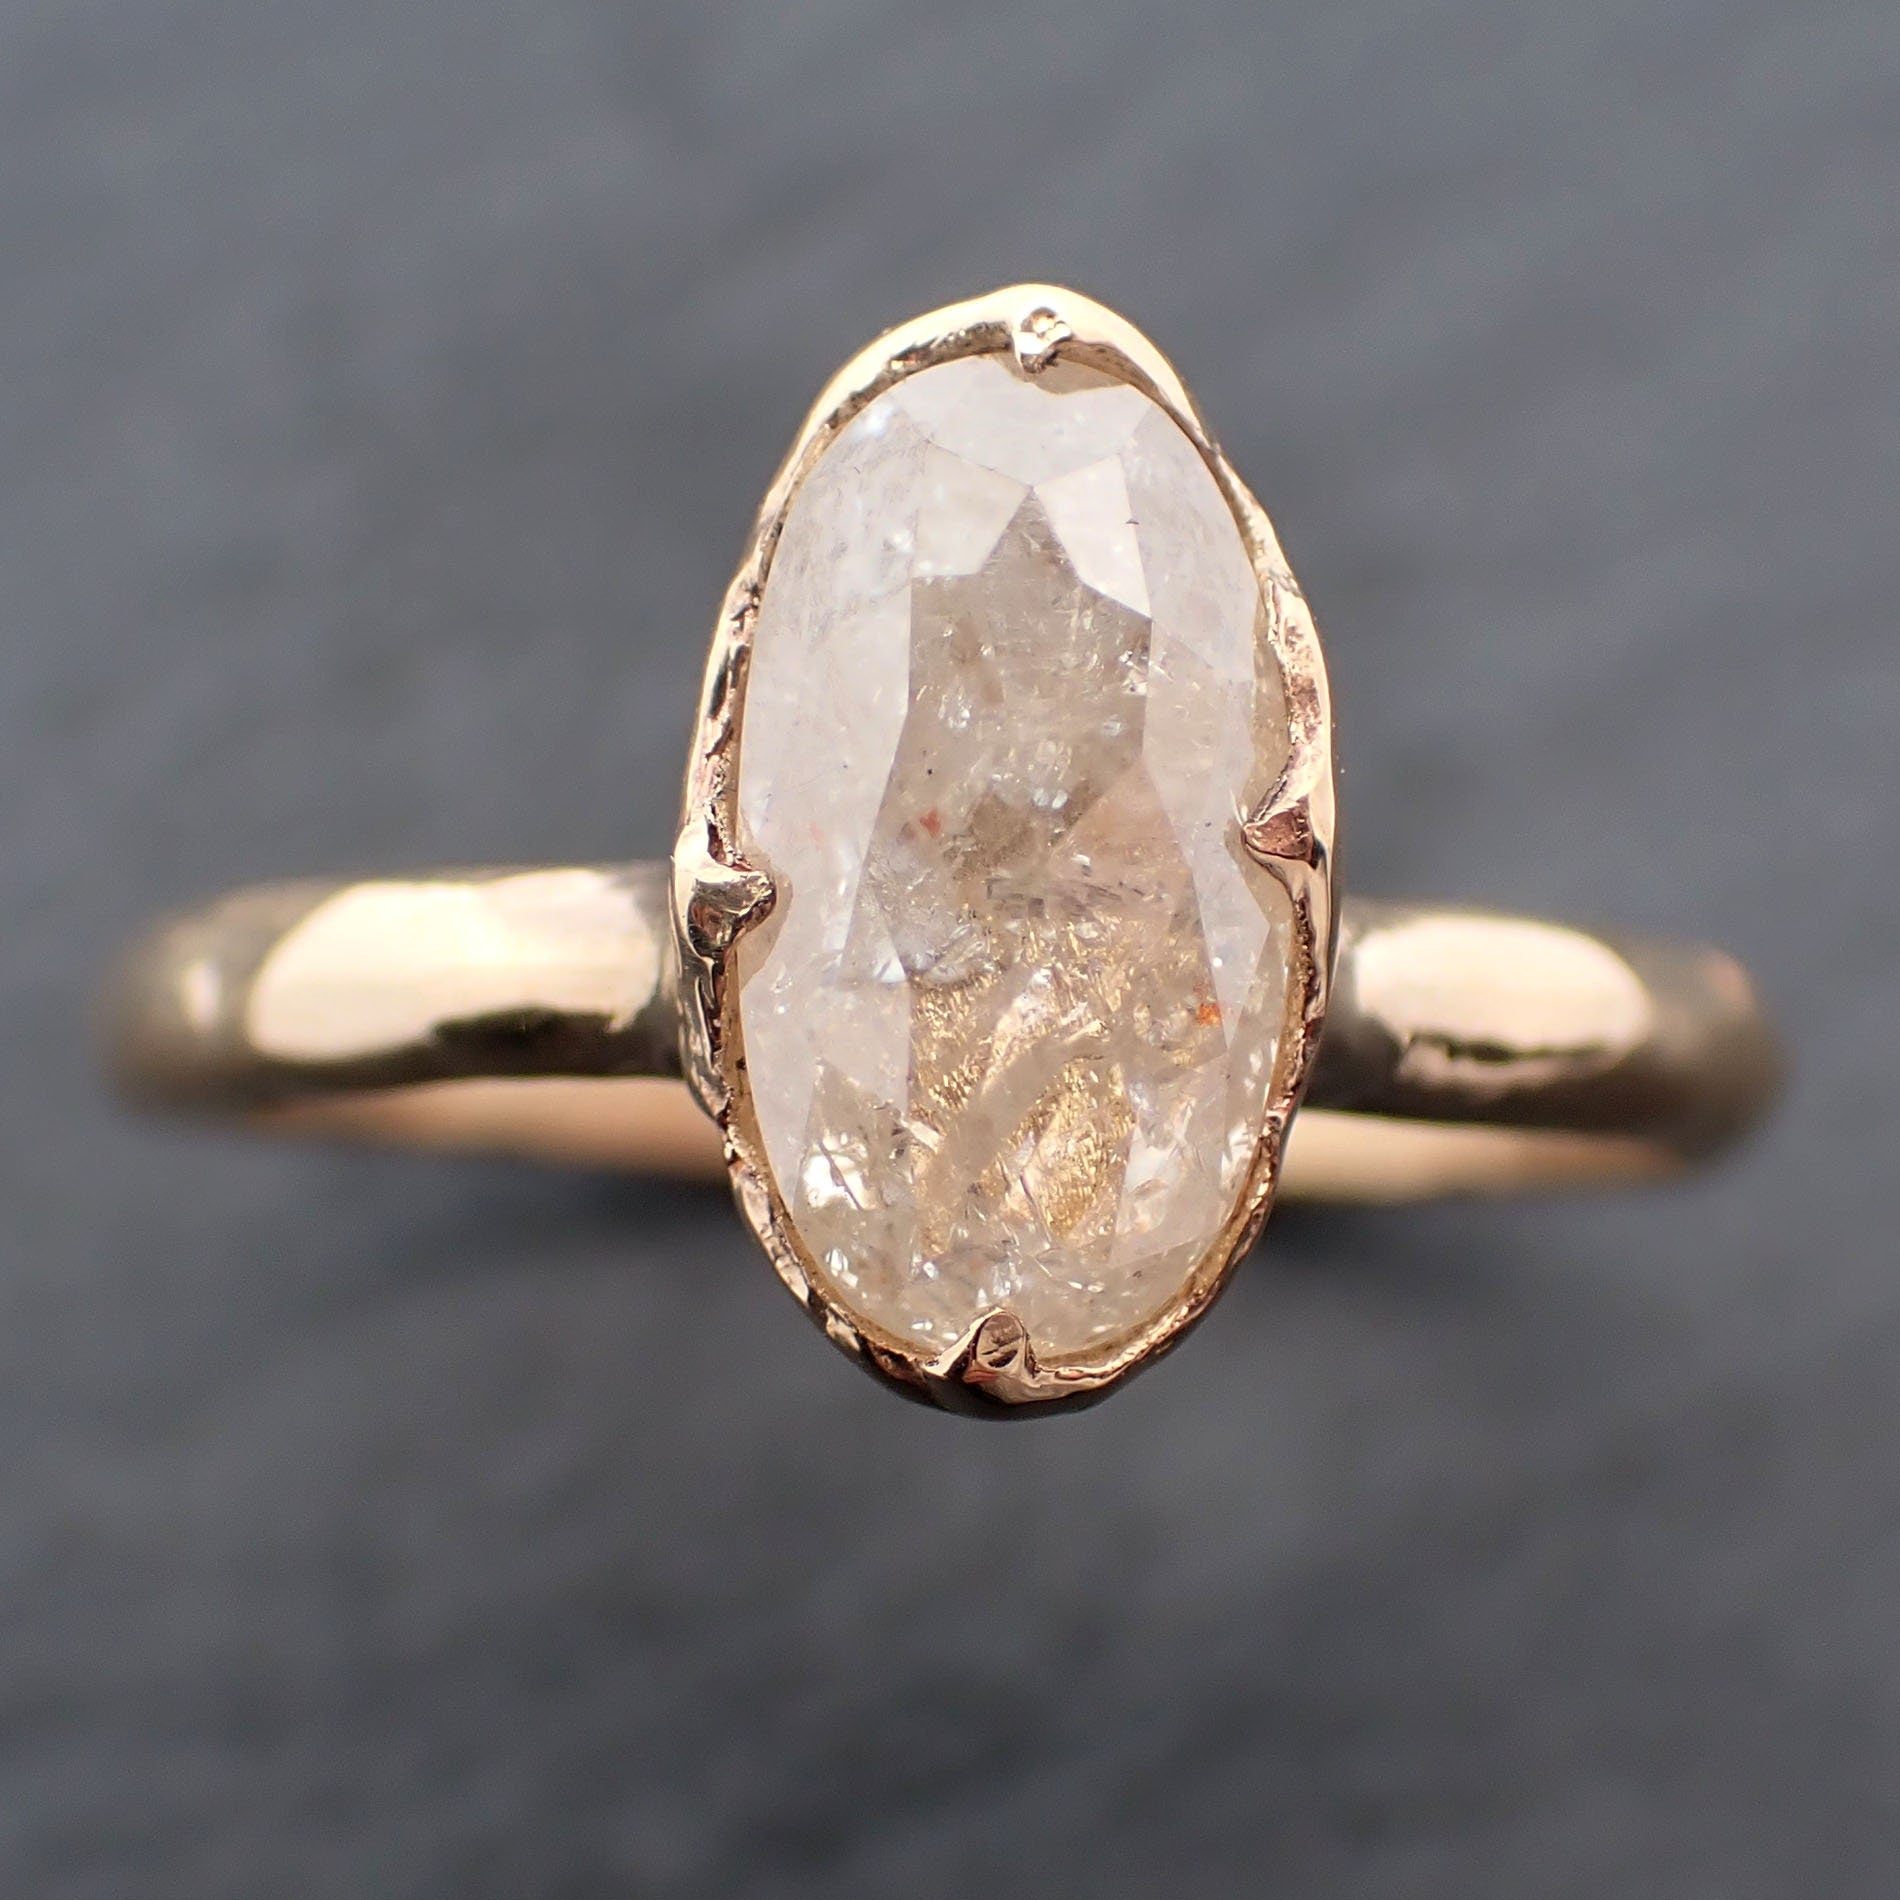 Fancy cut white Diamond Solitaire Engagement 18k yellow Gold Wedding Ring byAngeline 3282